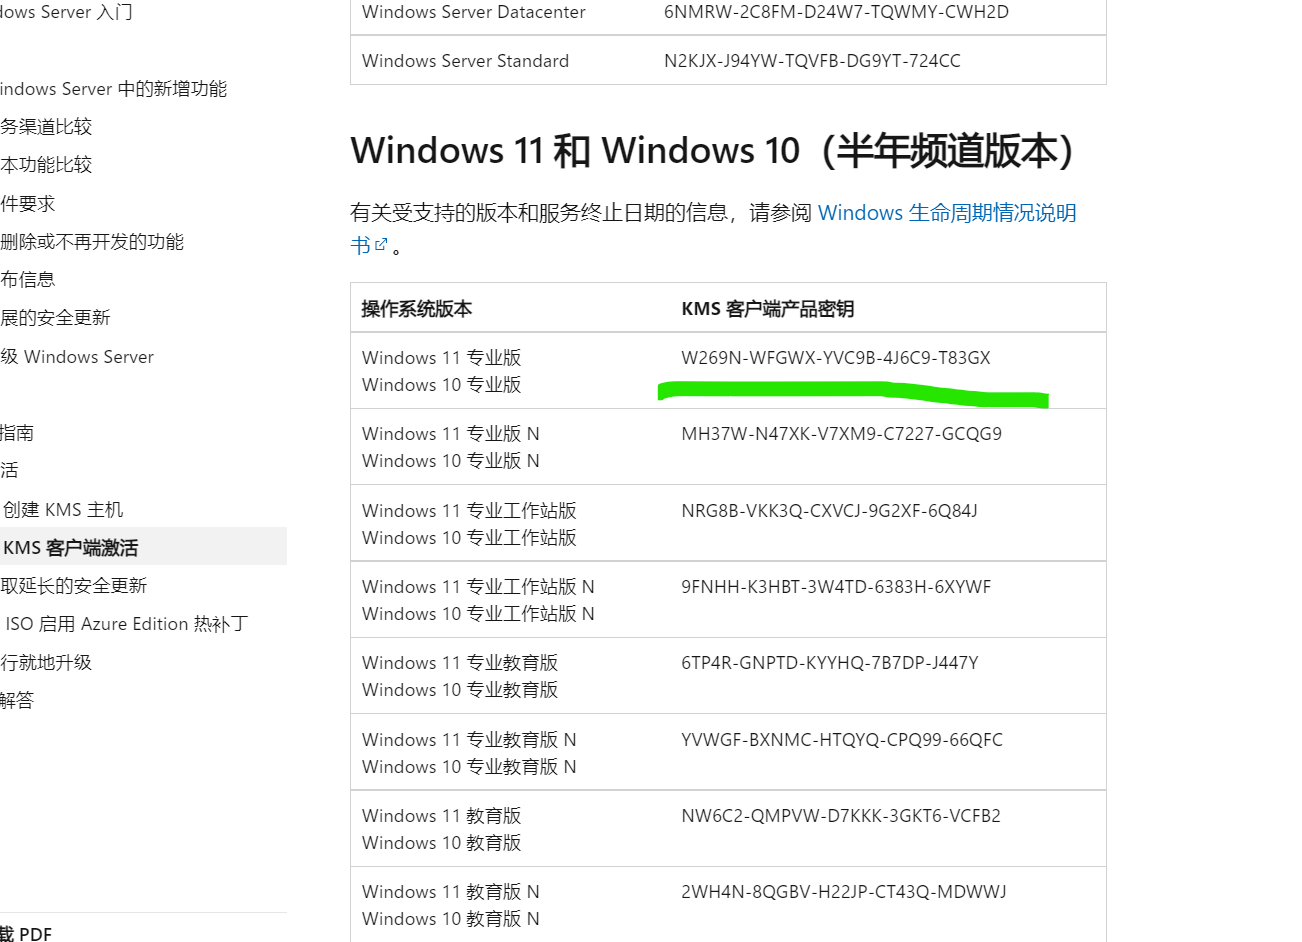 20230418 >windows11 slmgr/ ato 批量激活的和有效的kms server 